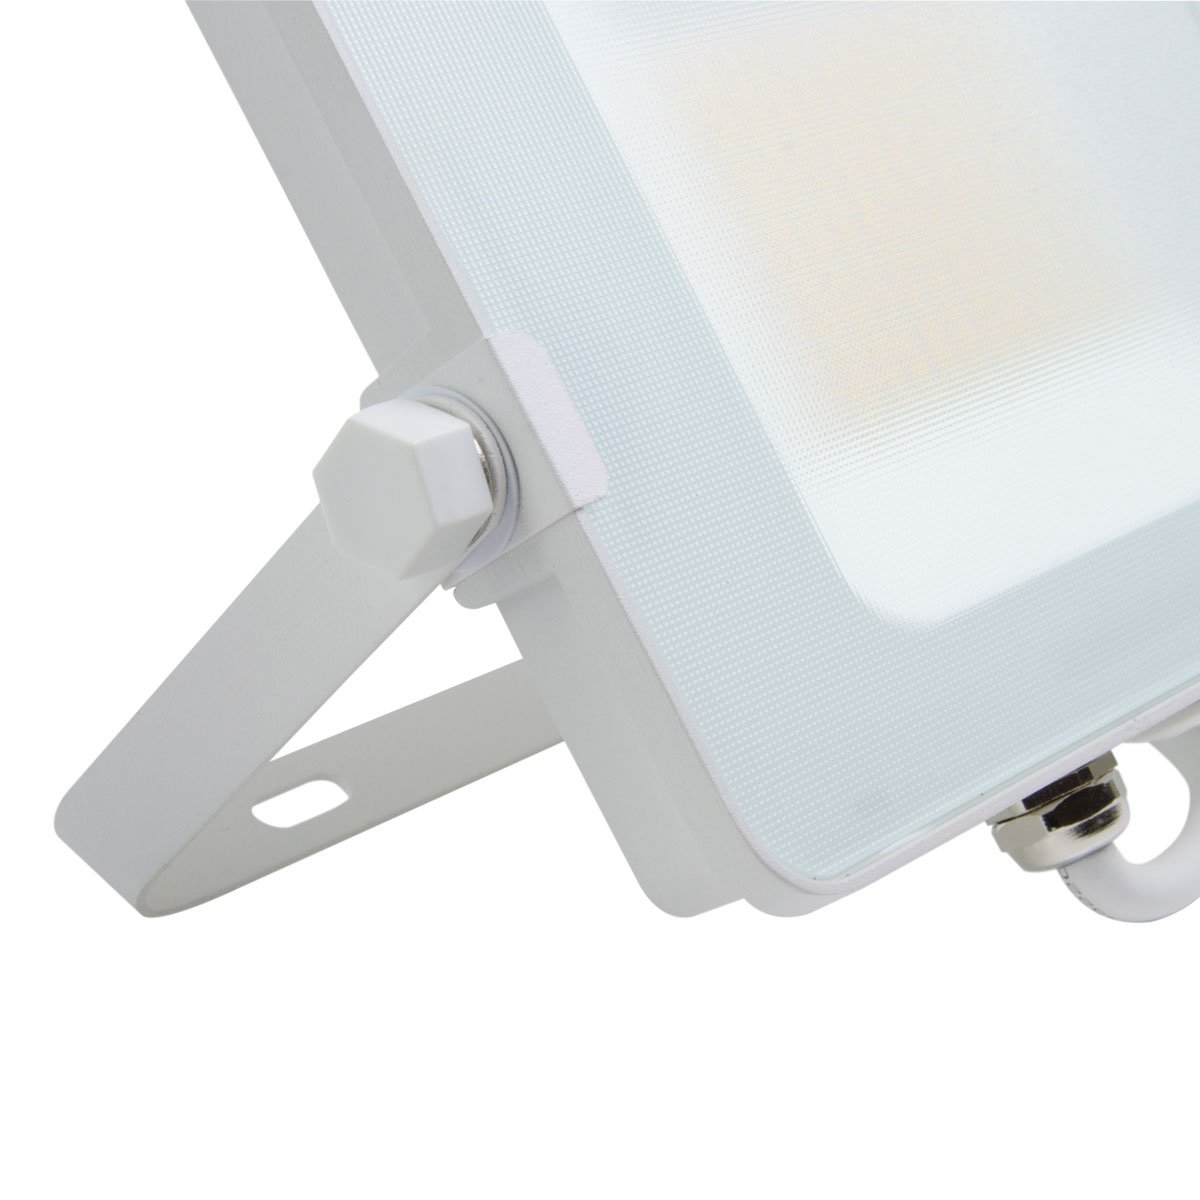 G.W.S LED Wholesale Ltd. Infinity LED Floodlight Infinity White Casing Tri-Colour (3000K/4000K/6000K) LED Flood Light